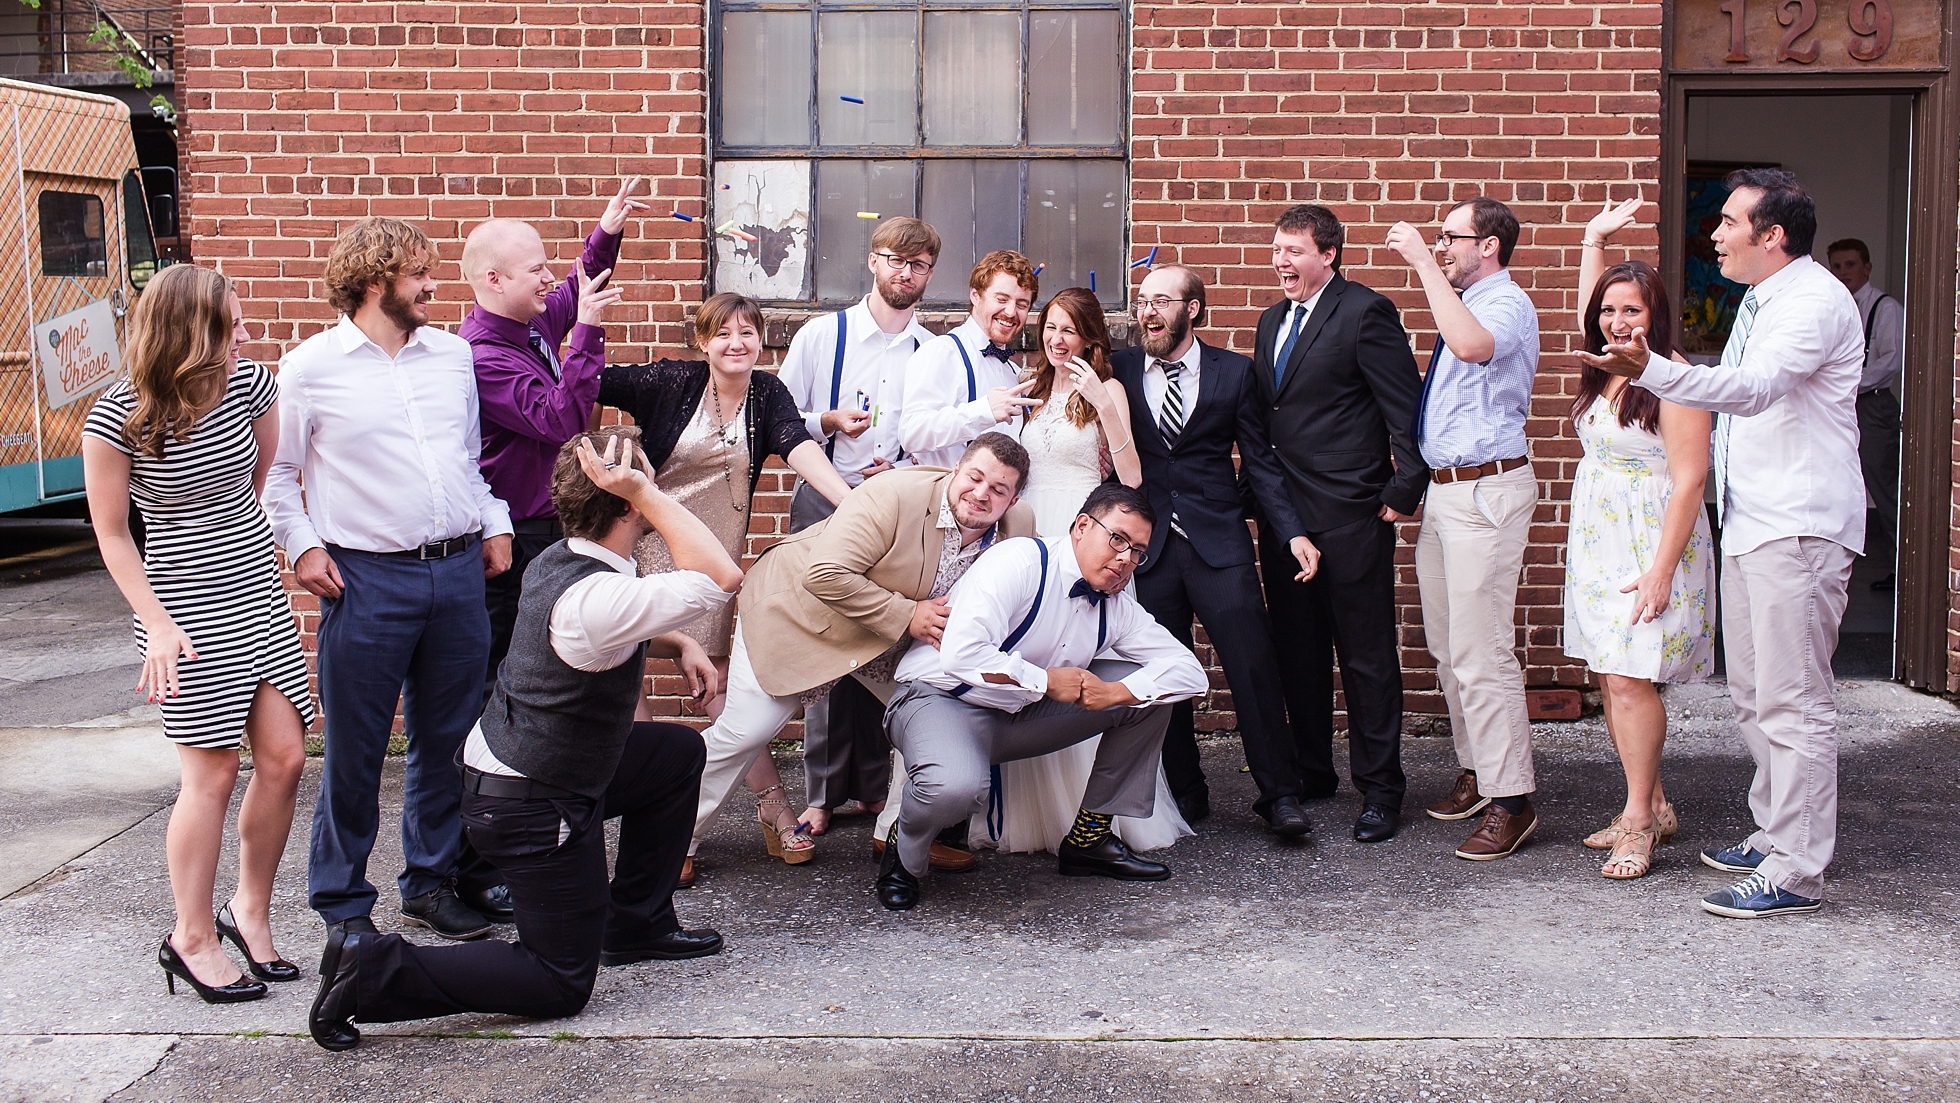 humans vs zombies wedding photos